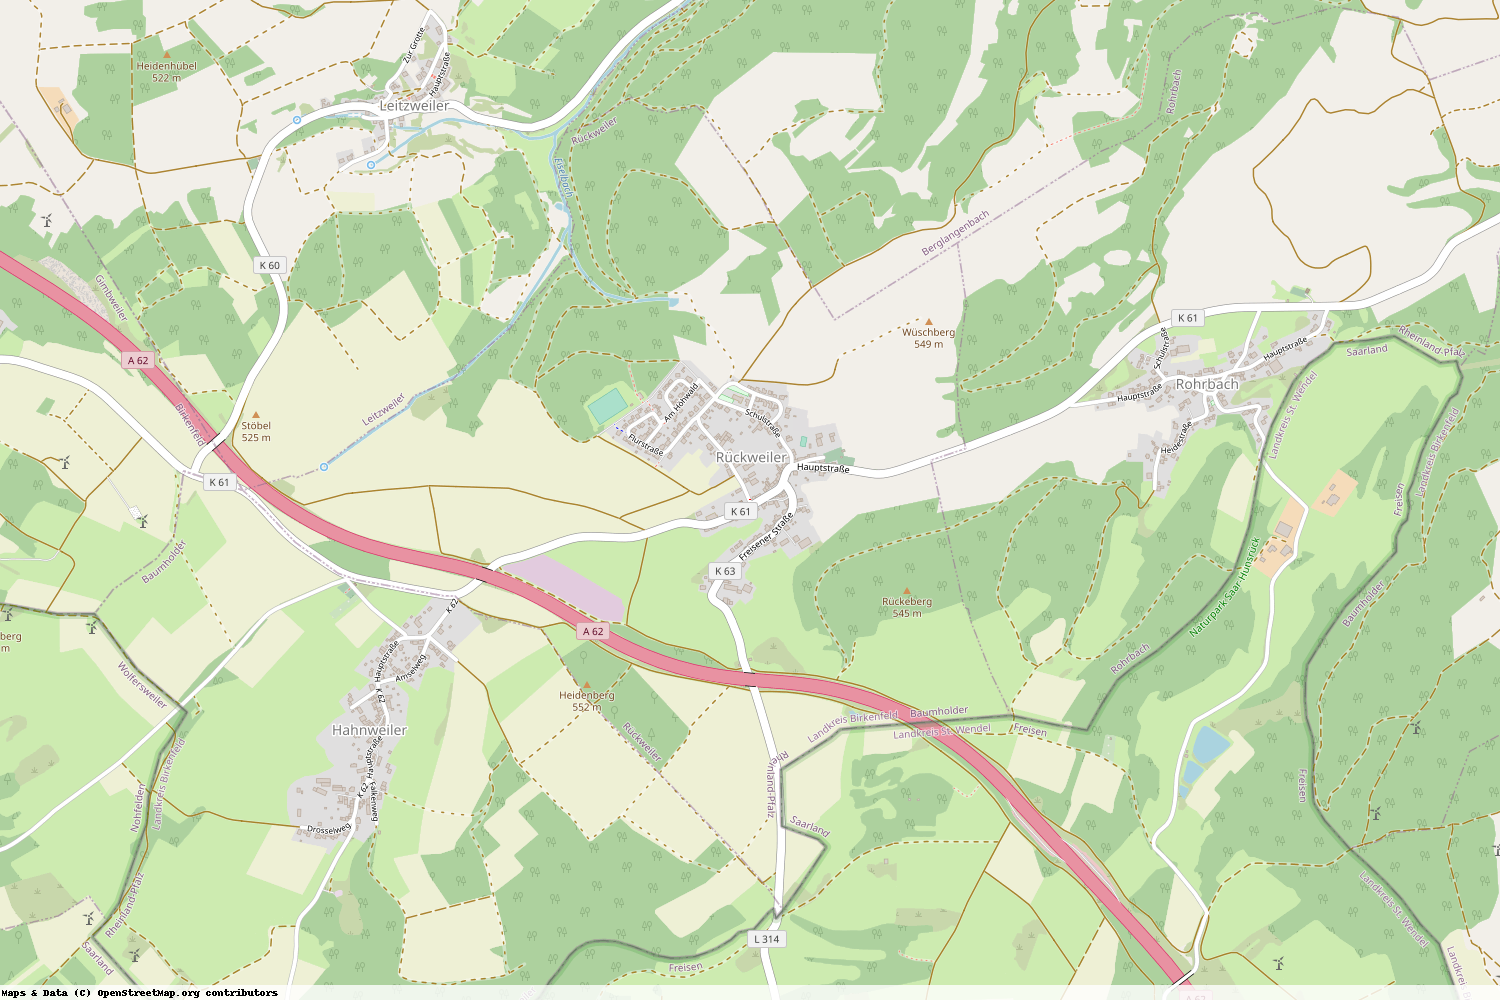 Ist gerade Stromausfall in Rheinland-Pfalz - Birkenfeld - Rückweiler?